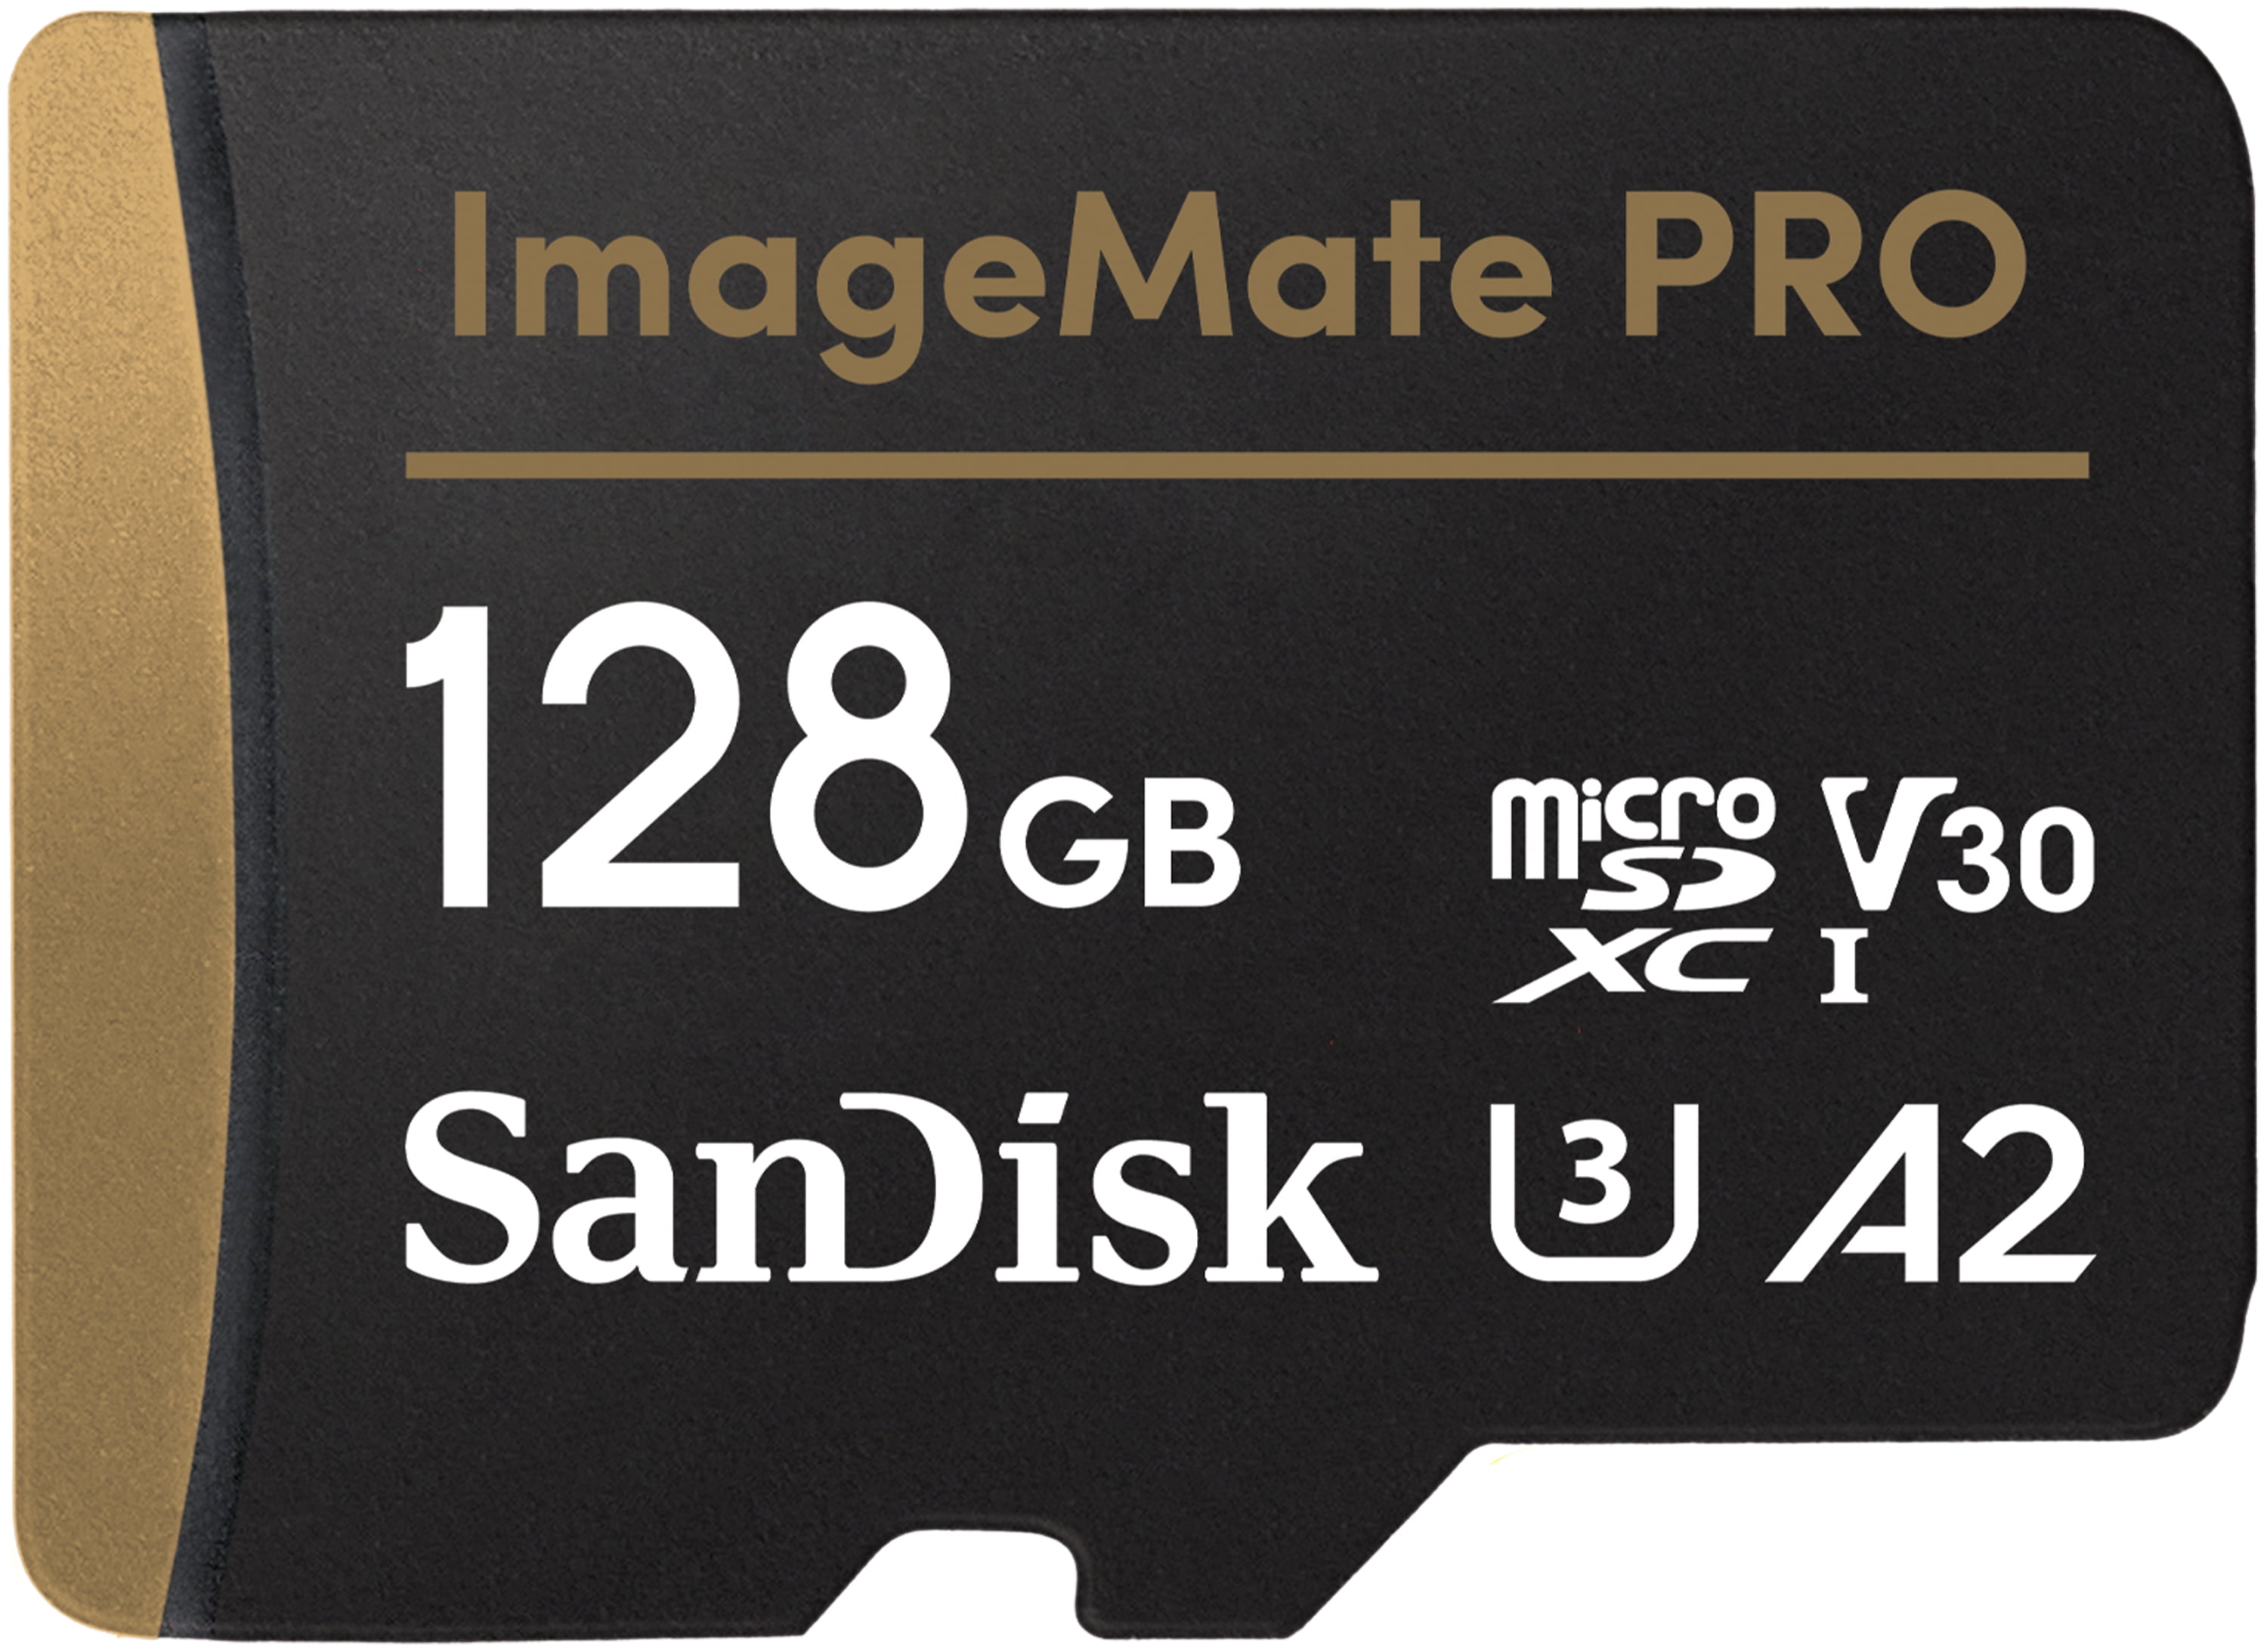 SanDisk 128GB ImageMate Pro microSDXC UHS Memory Card with Adapter 200MB  SDSQXBZ128GAW6KA